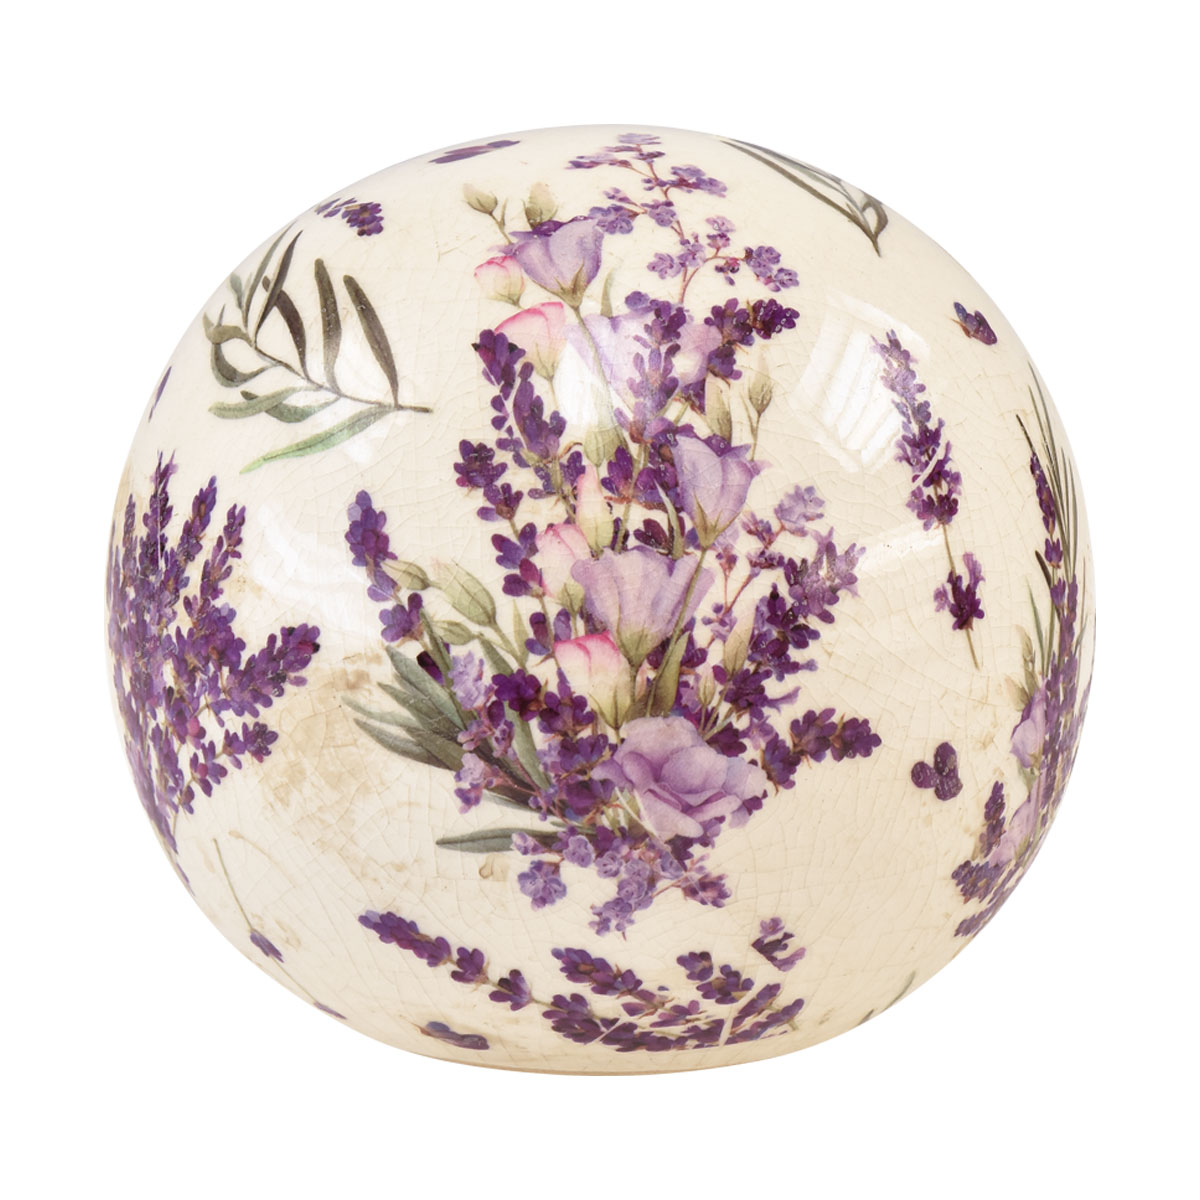 Keramik Kugel mit Lavendel Motiv Keramik Deko Lila Creme  12cm-580183-012-131